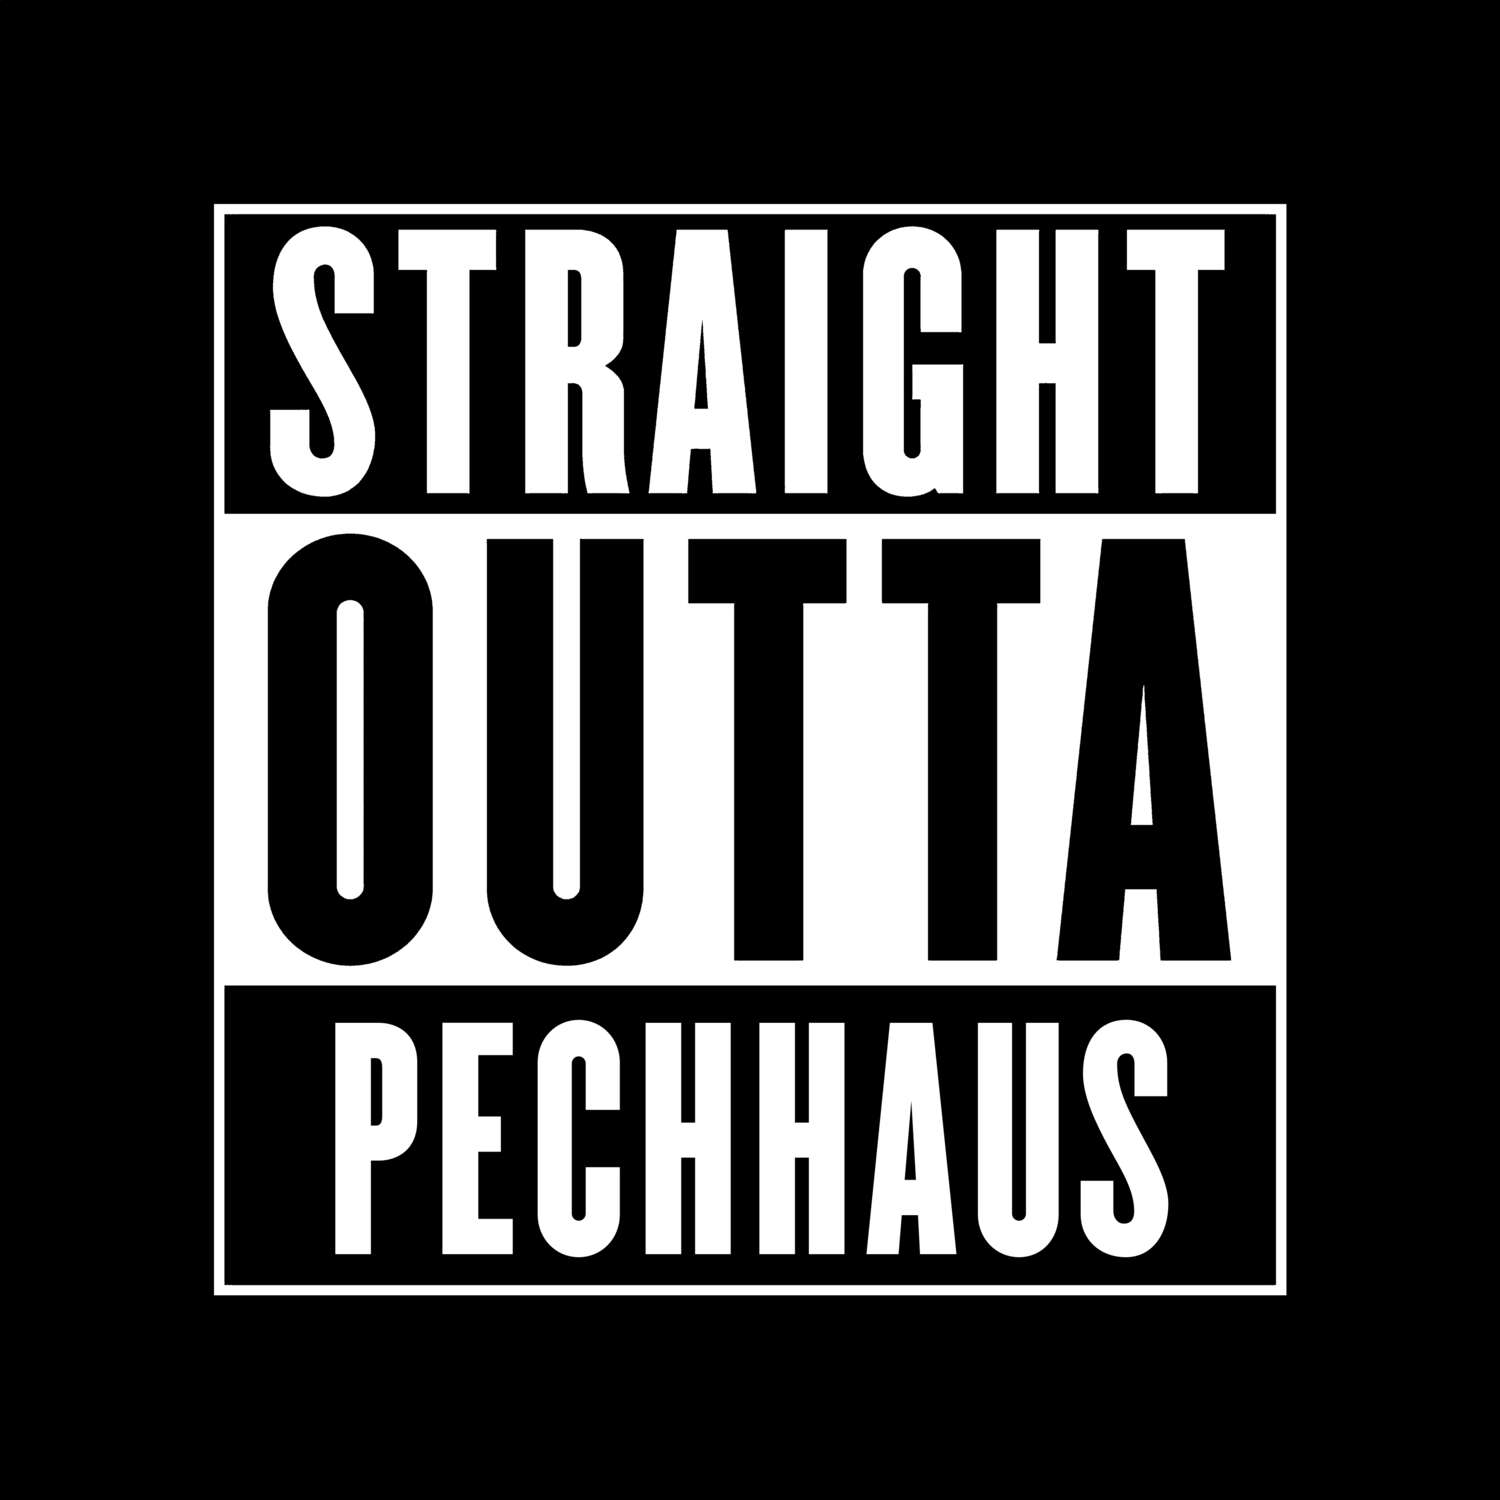 Pechhaus T-Shirt »Straight Outta«